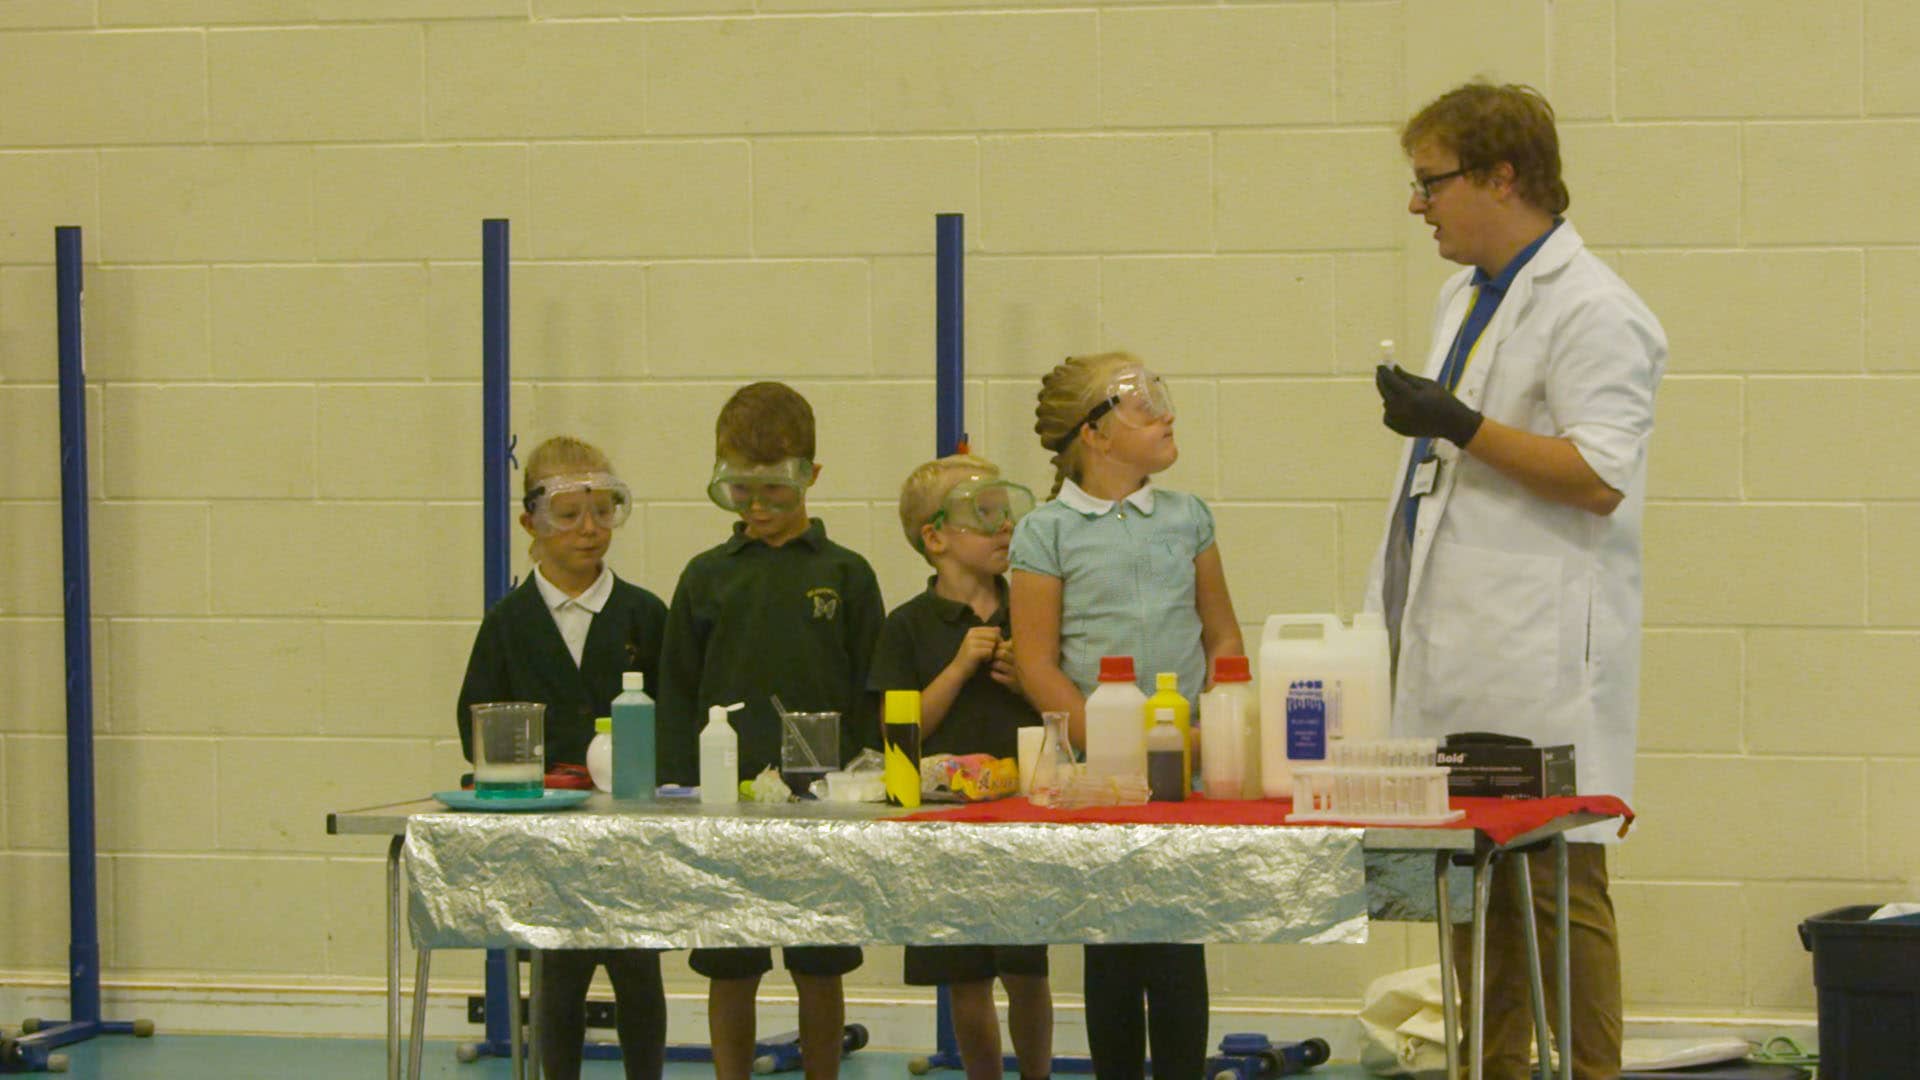 Teacher demonstrating science experiement to children